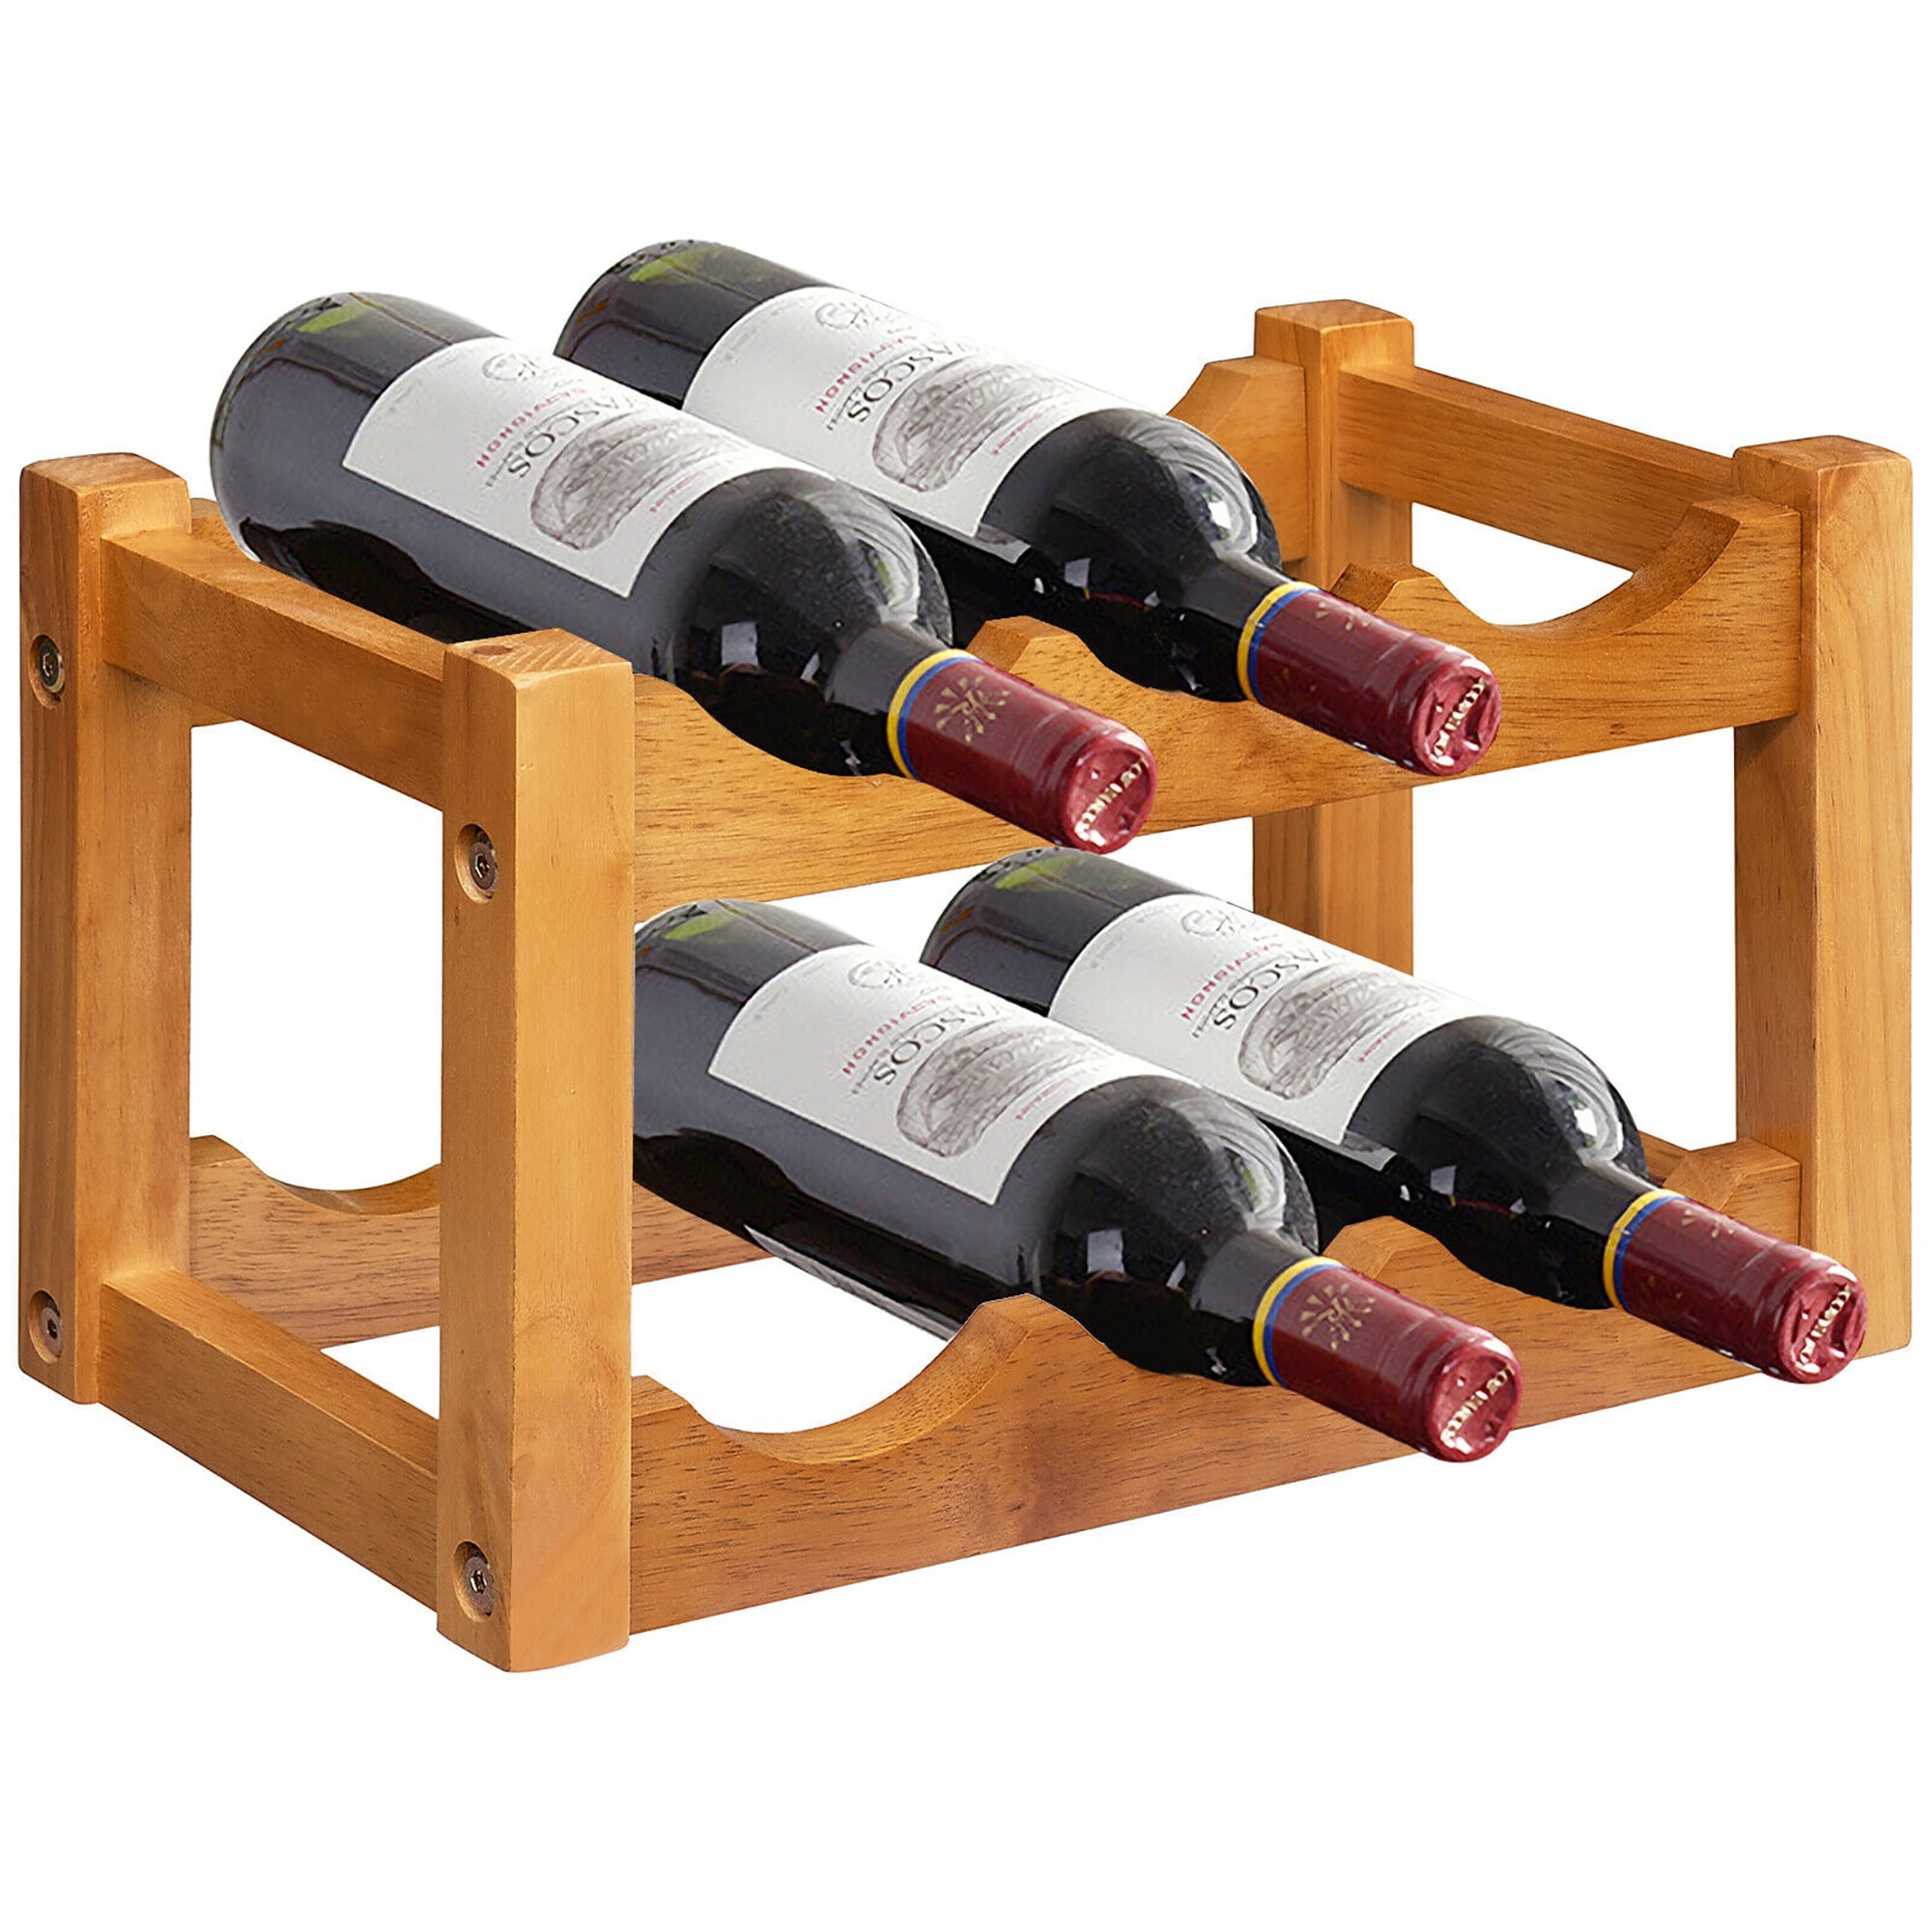 2 Bottle Wine Rack on Sale, UP TO 66% OFF | www.editorialelpirata.com